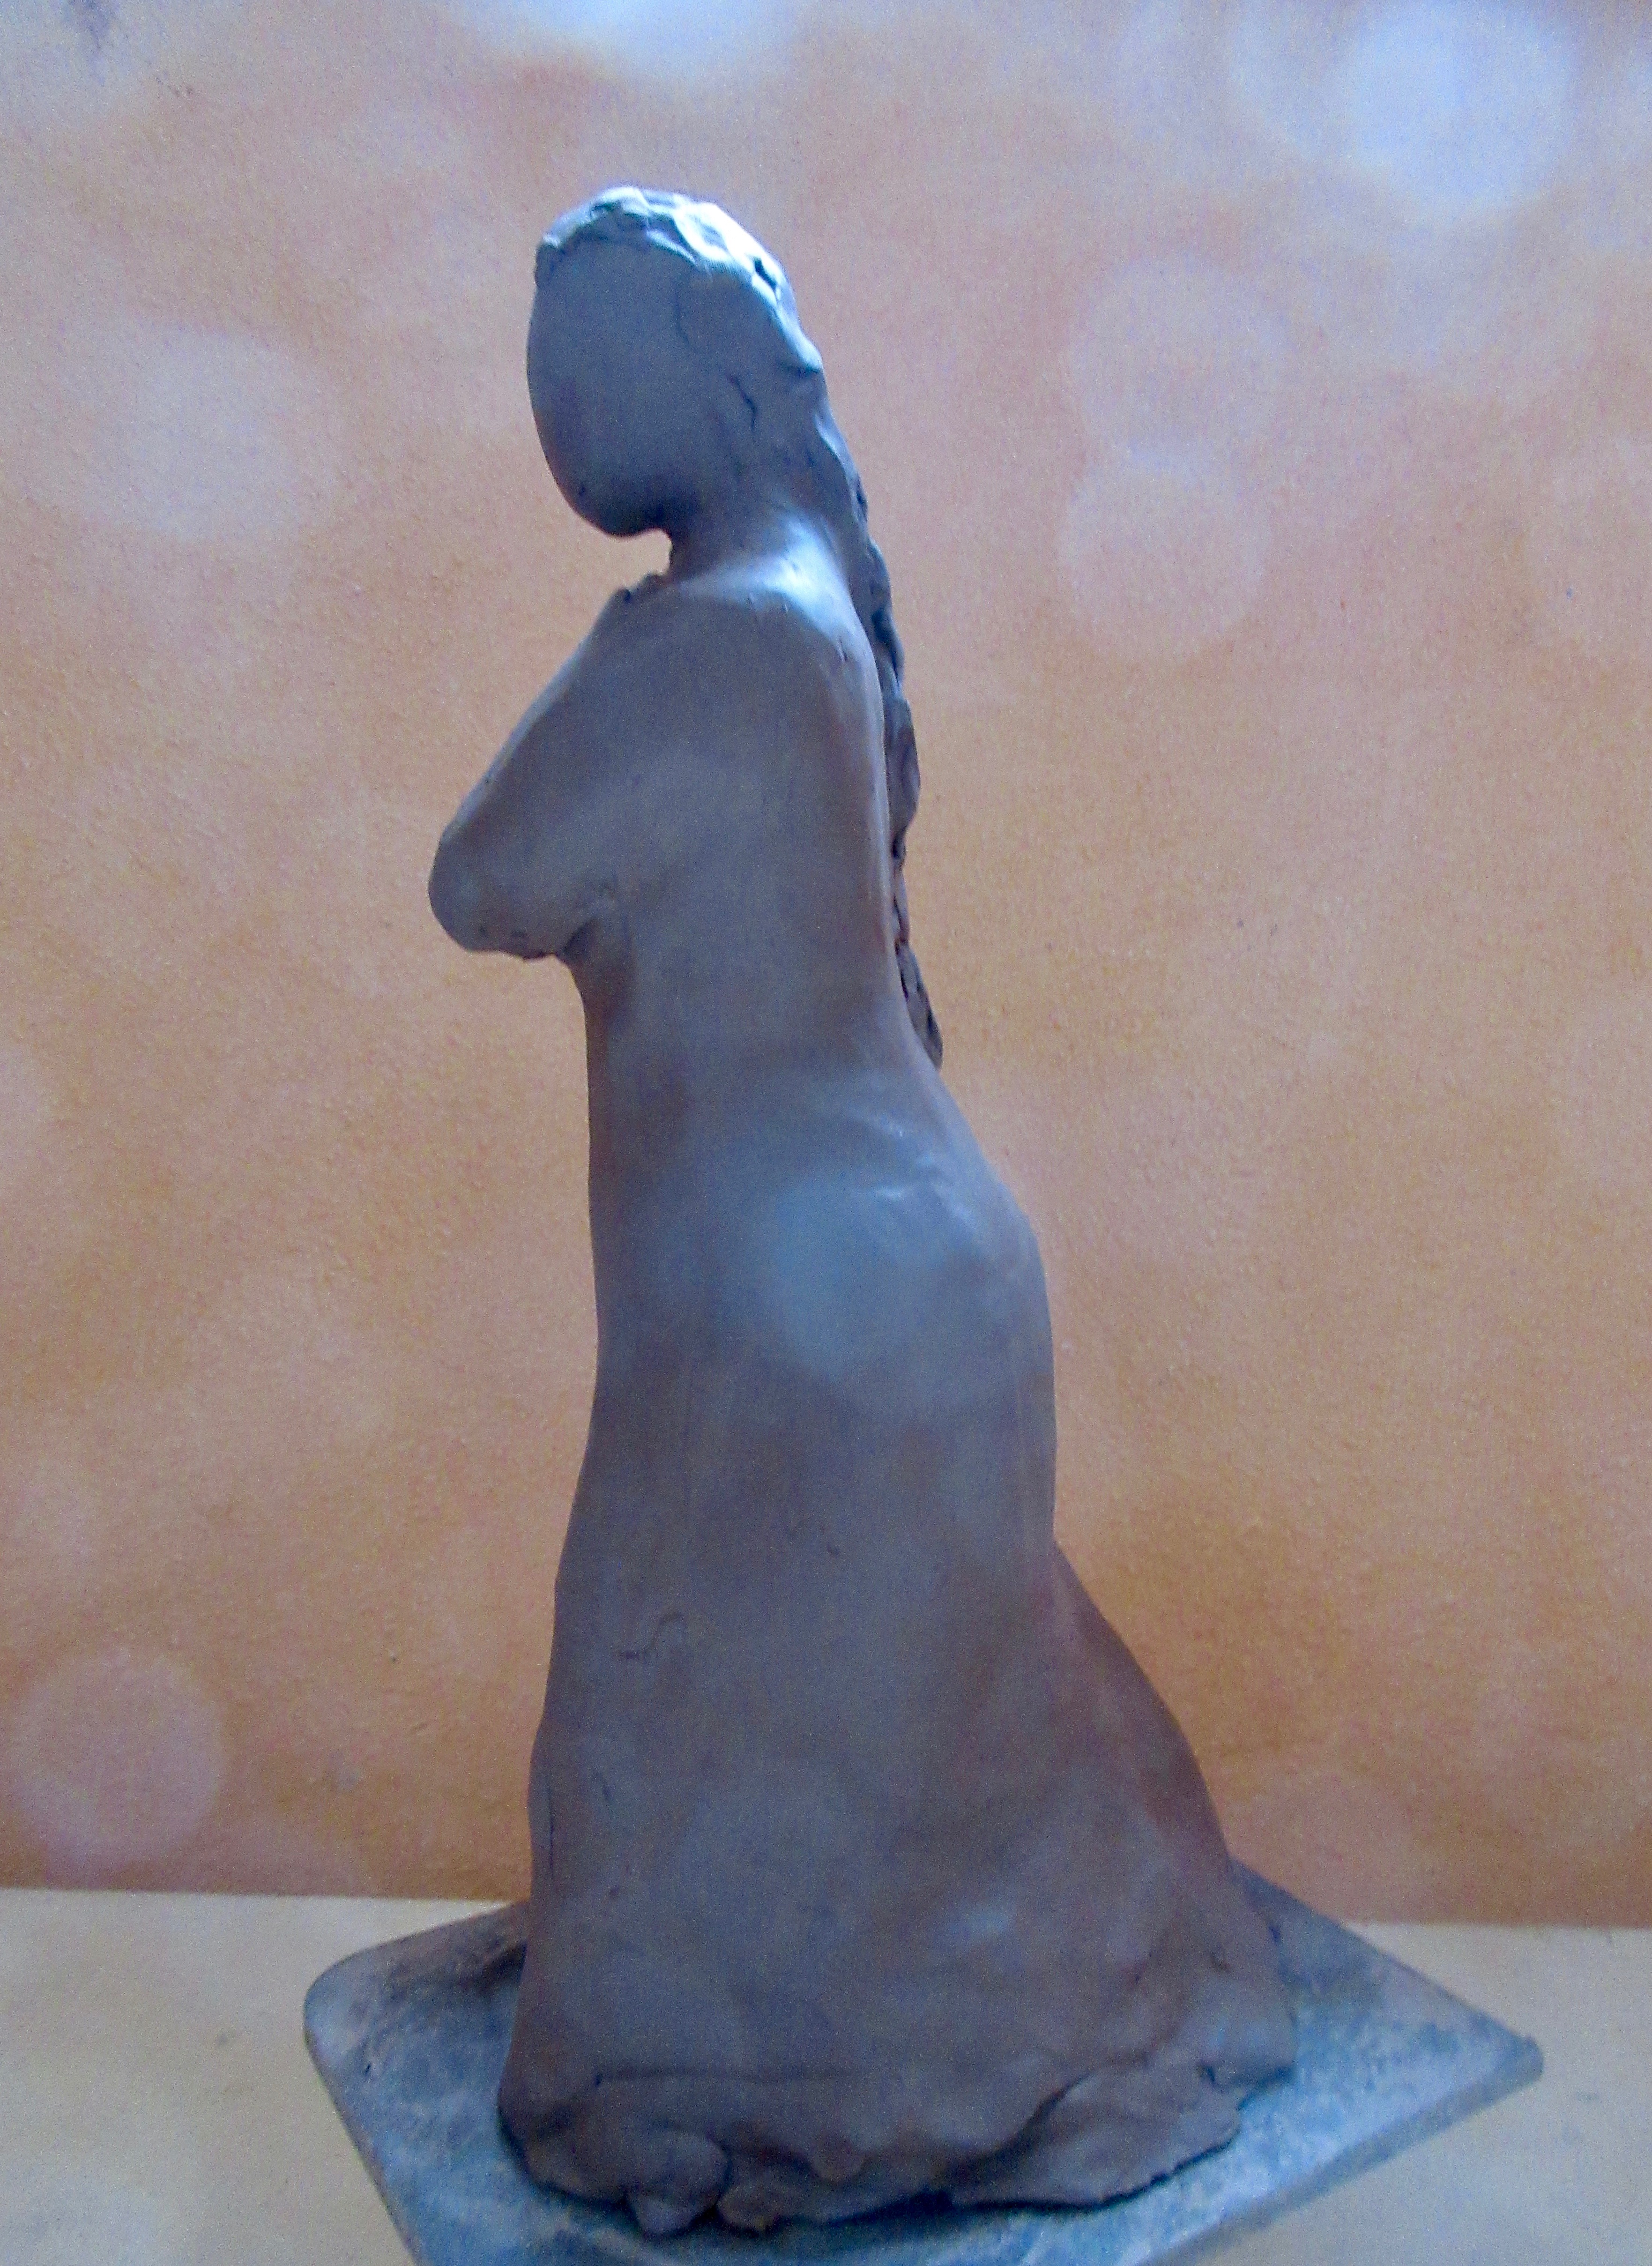 clay figurine of a woman walking